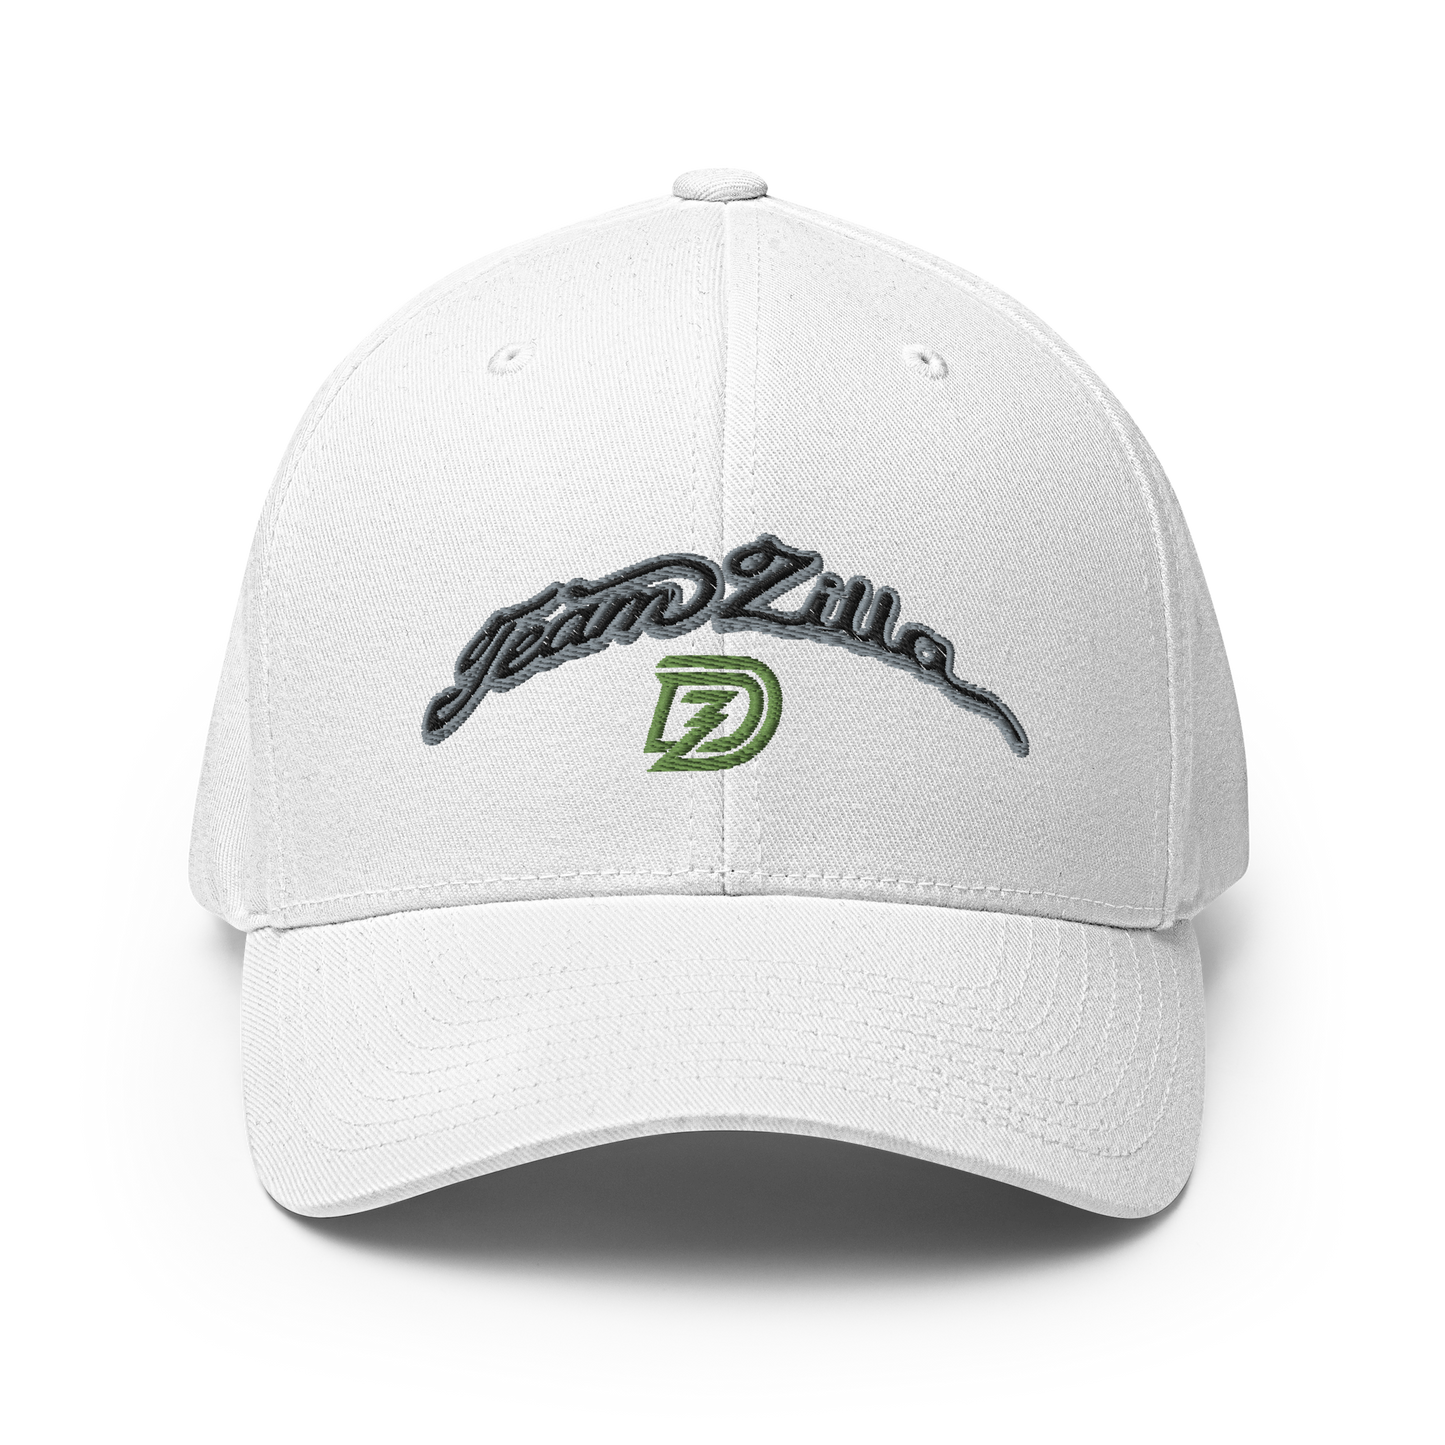 Team Zilla Flexfit Cap in White